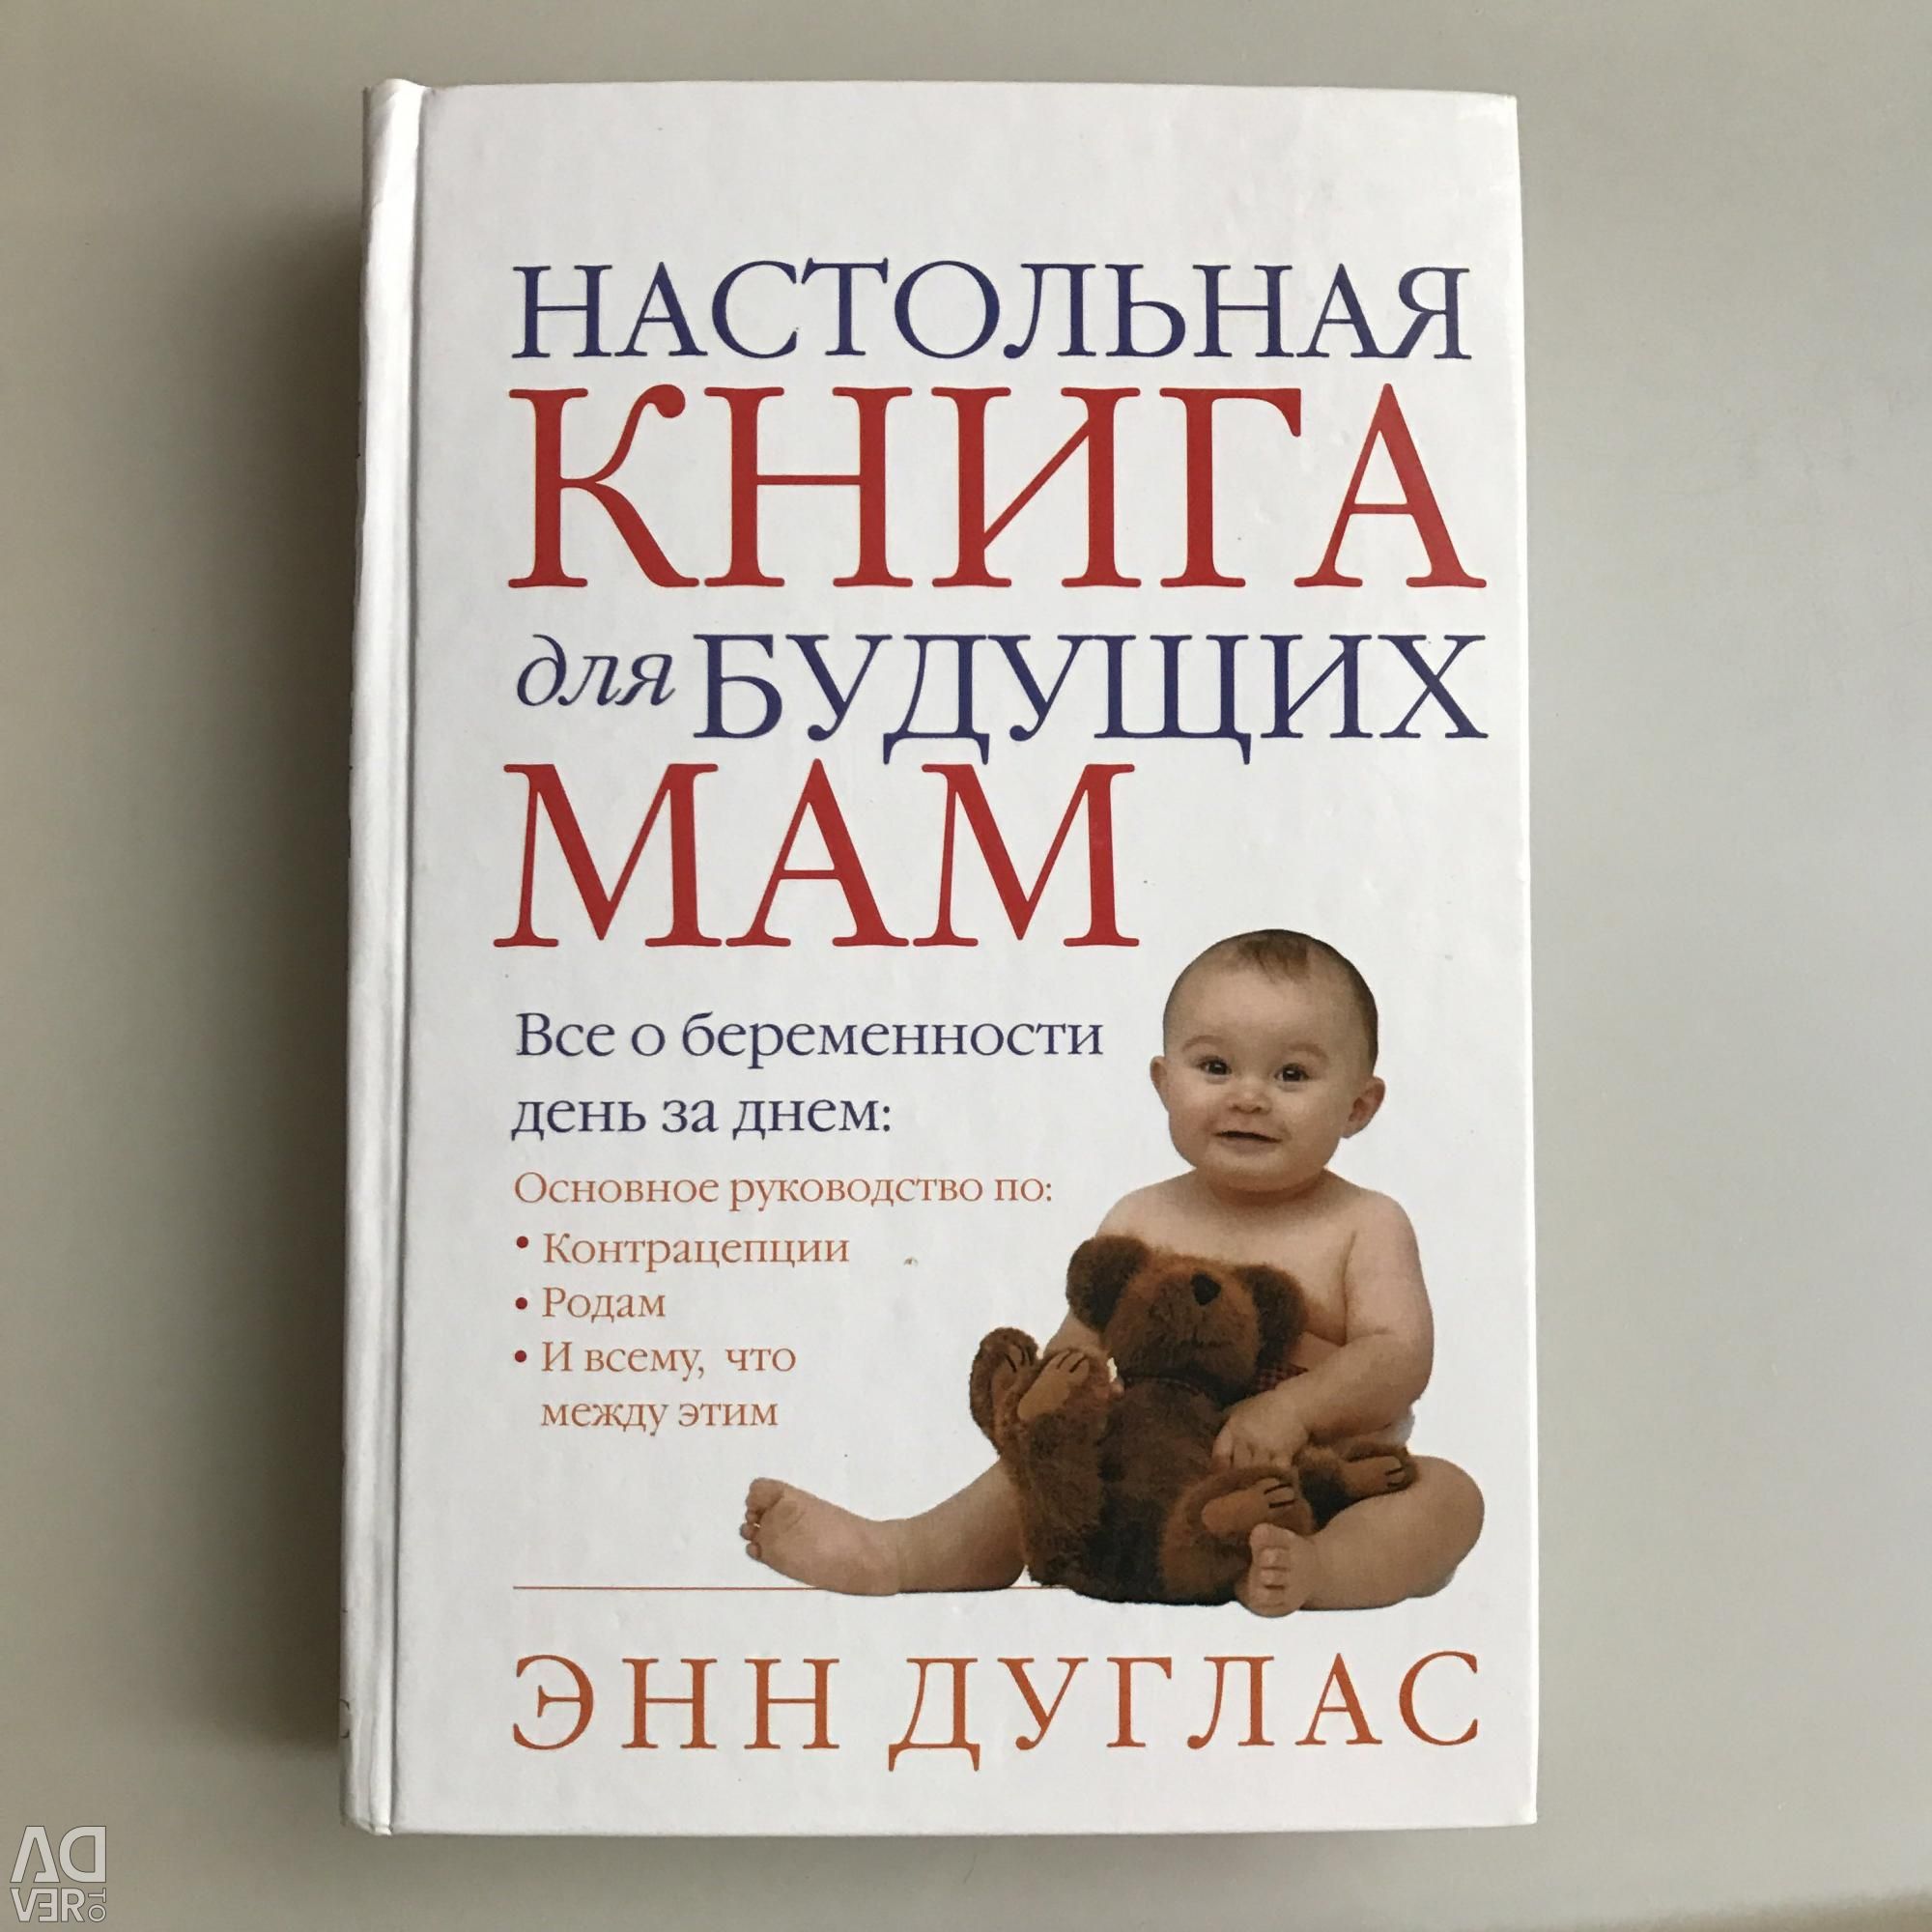 Новая мама книга